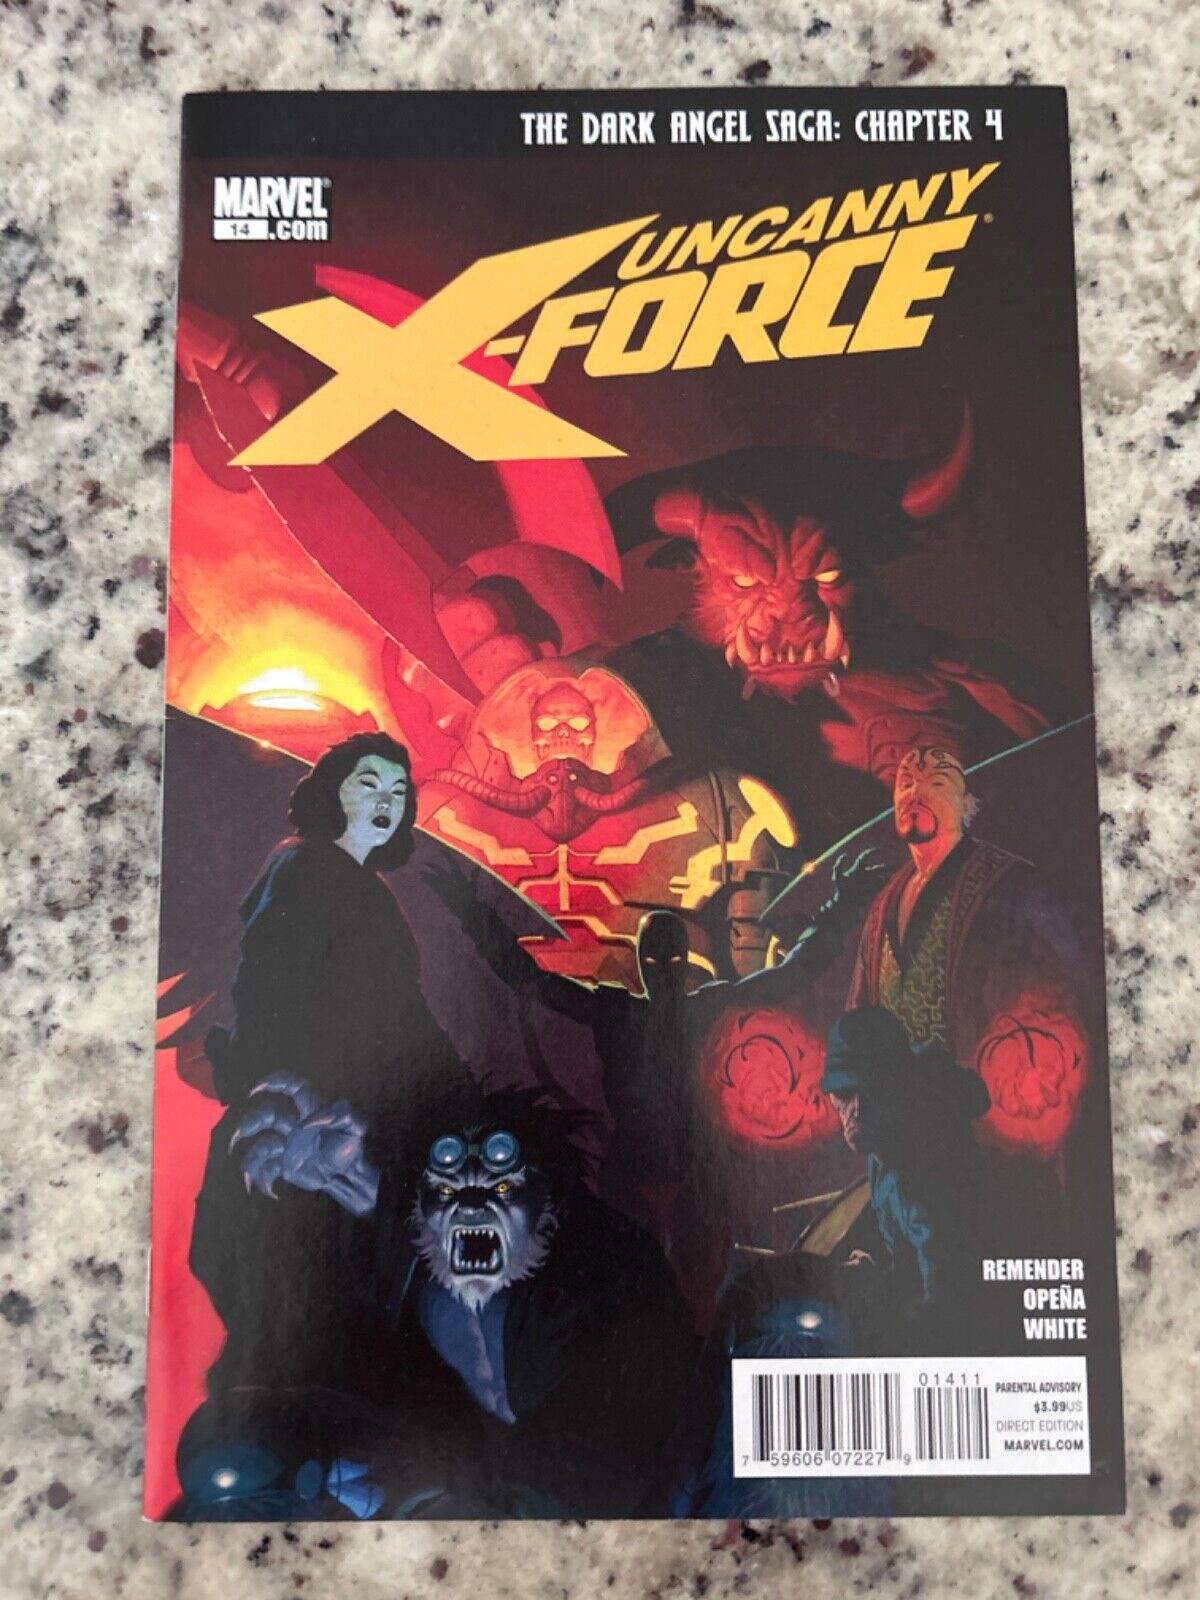 Uncanny X-Force #14 Vol. 1 (Marvel, 2011) vf